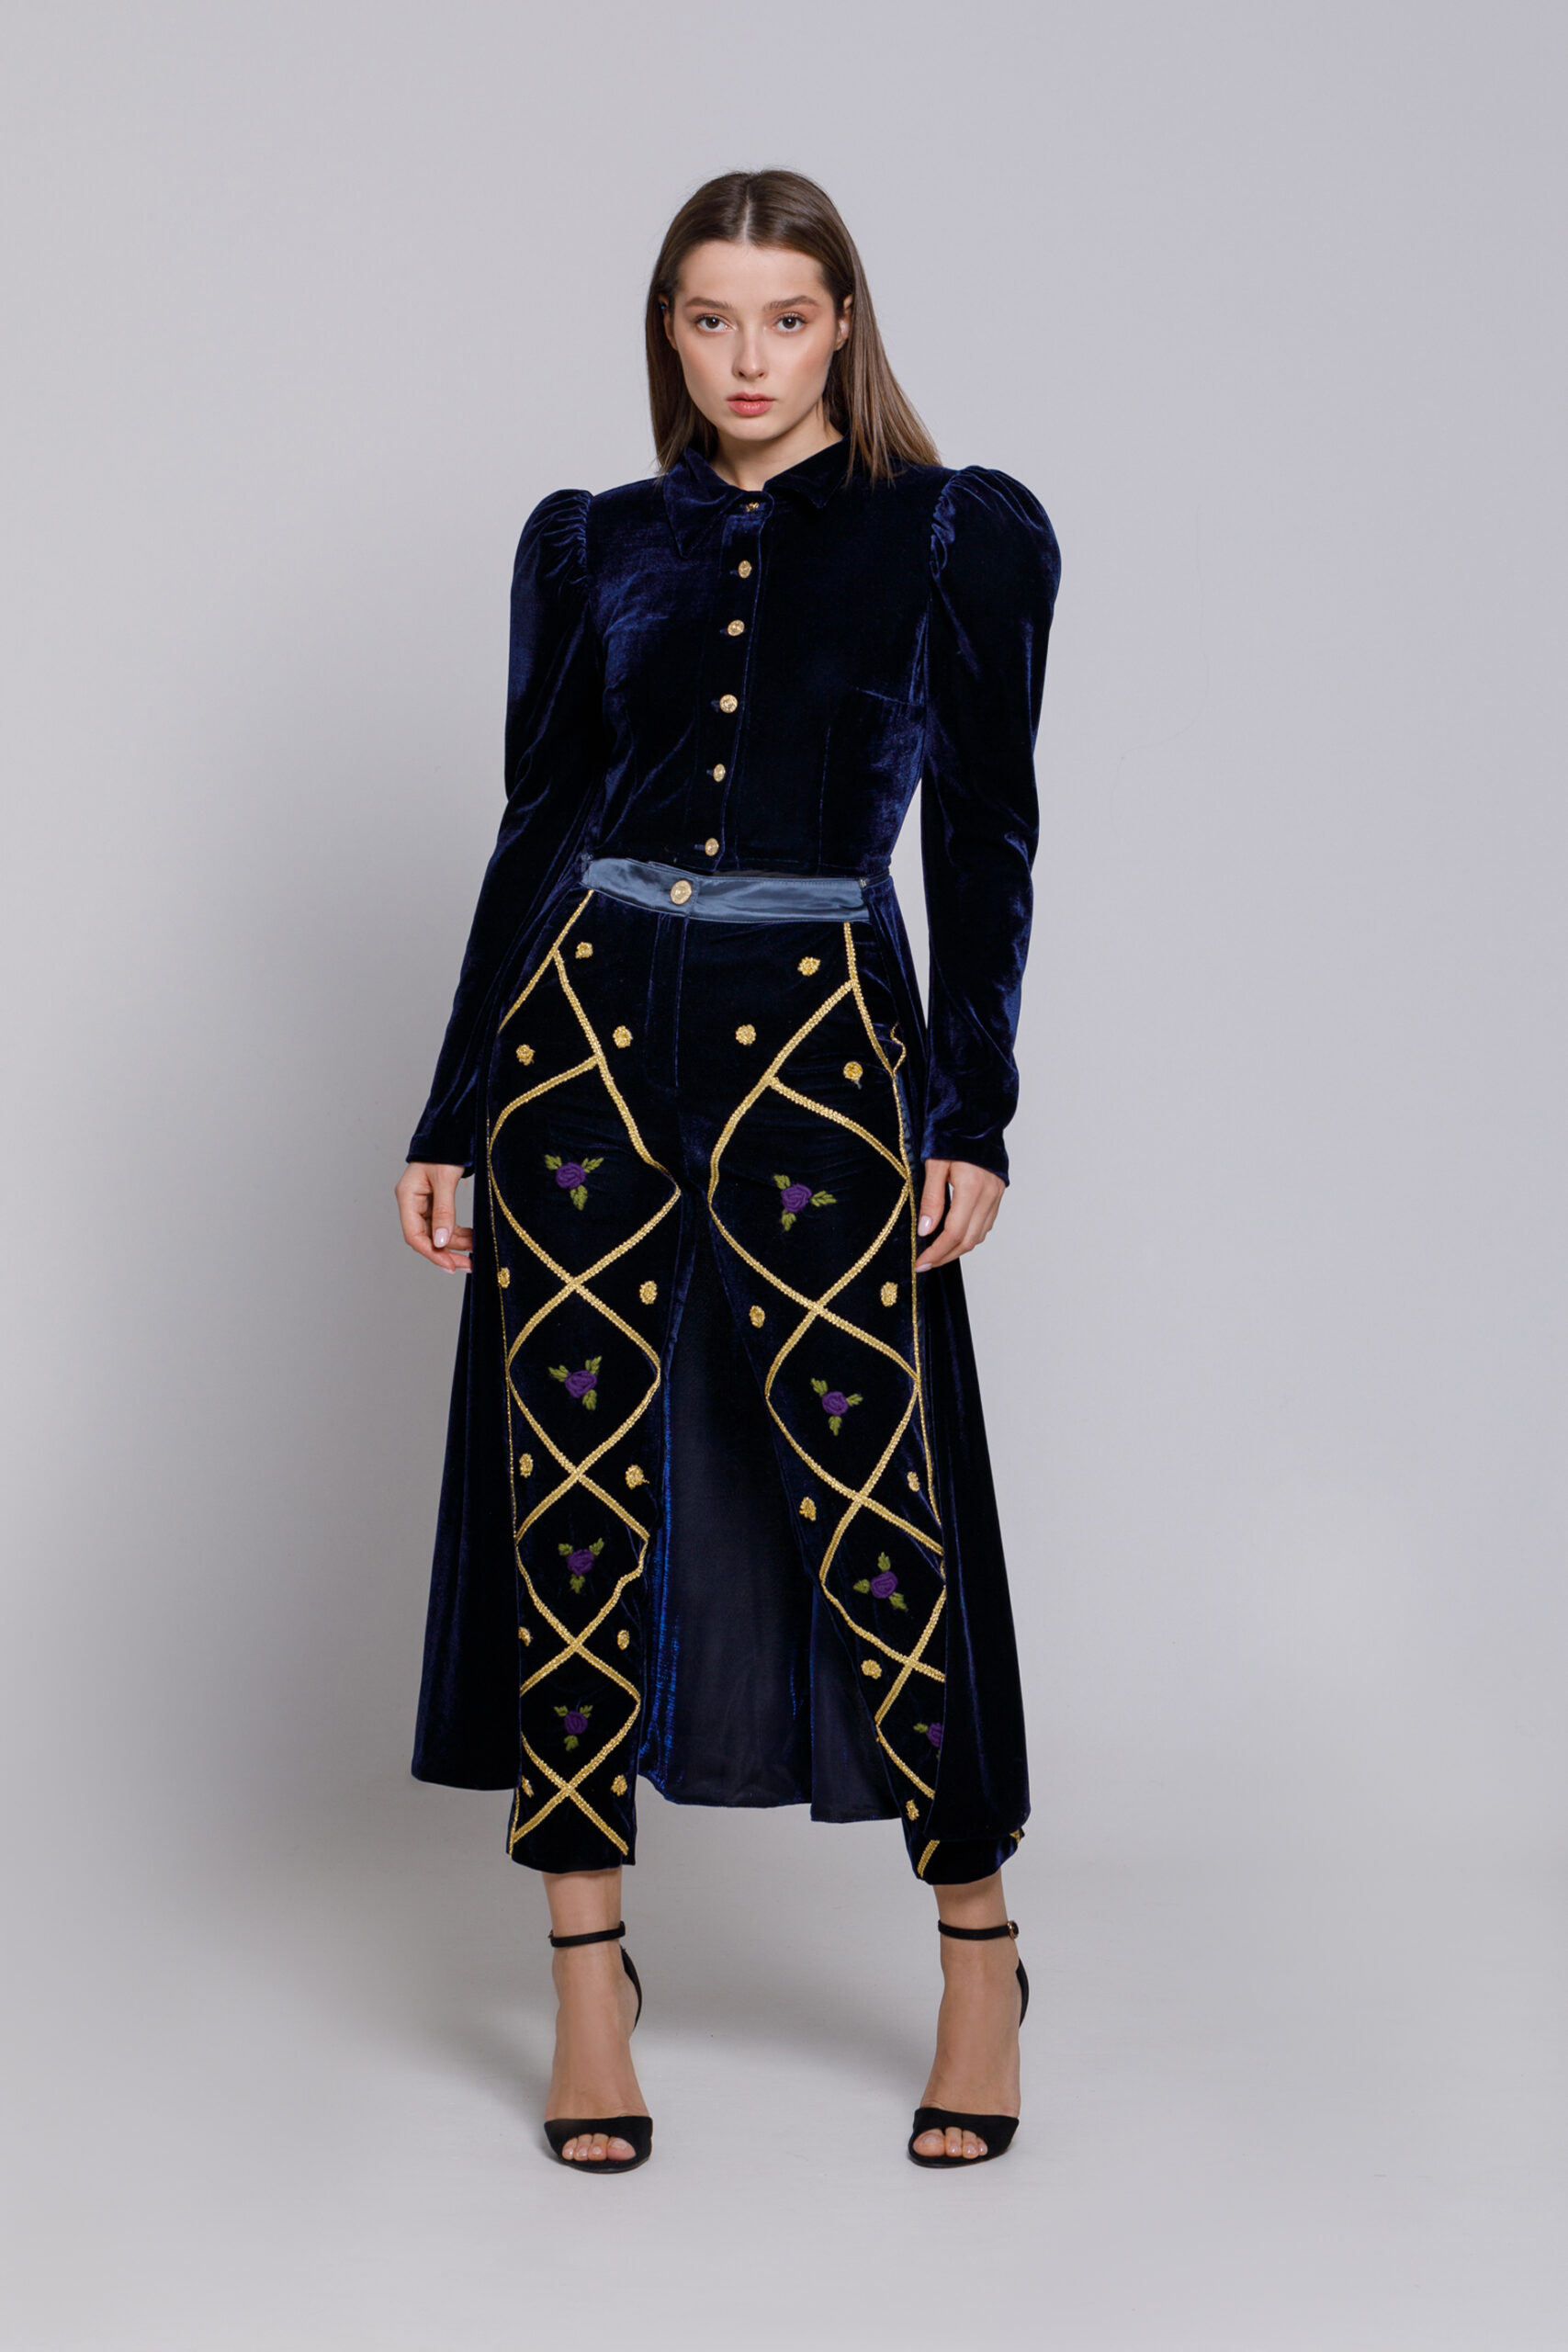 Pantalon TAMAR din catifea bleumarin cu romburi aurii. Materiale naturale, design unicat, cu broderie si aplicatii handmade